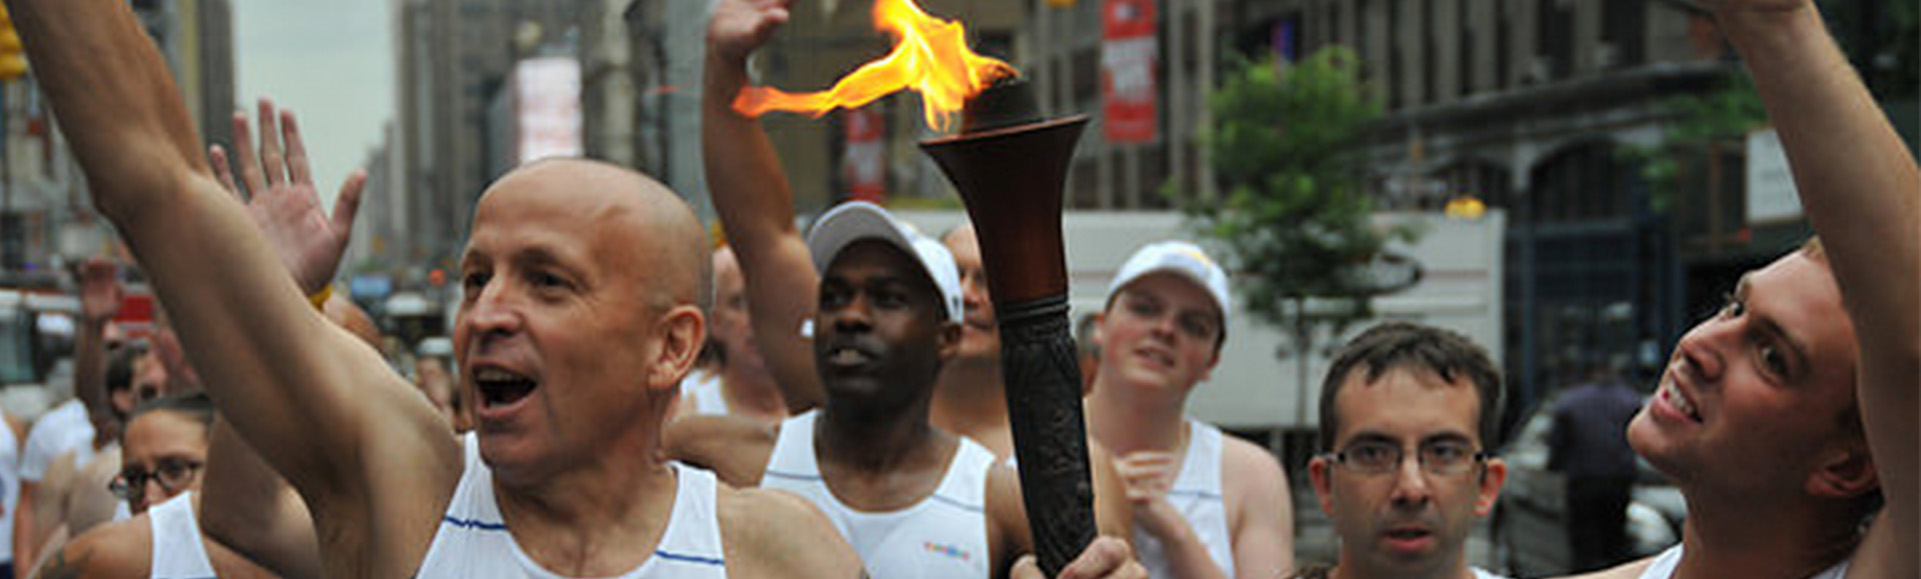 Torch Run Special Olympics South Carolina